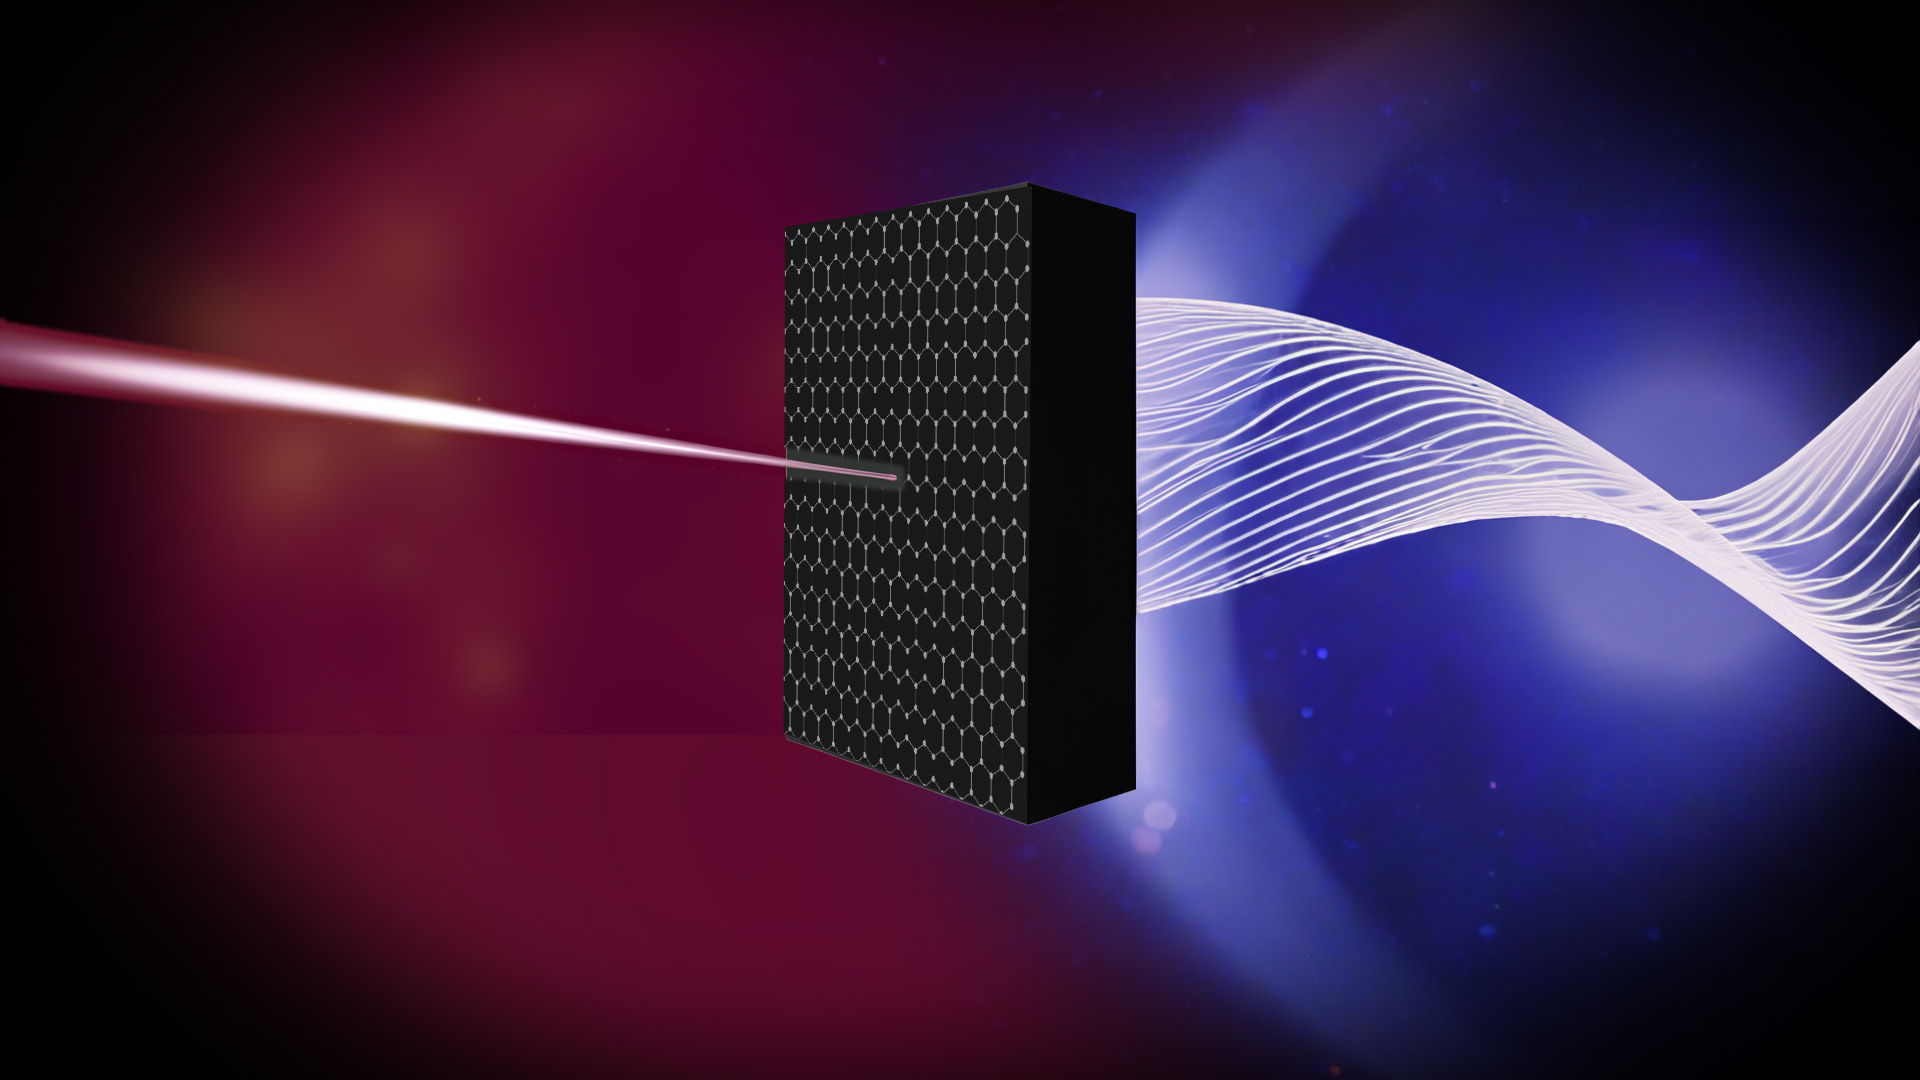 ASU research team develops breakthrough ultrashort laser pulse technology | ASU News